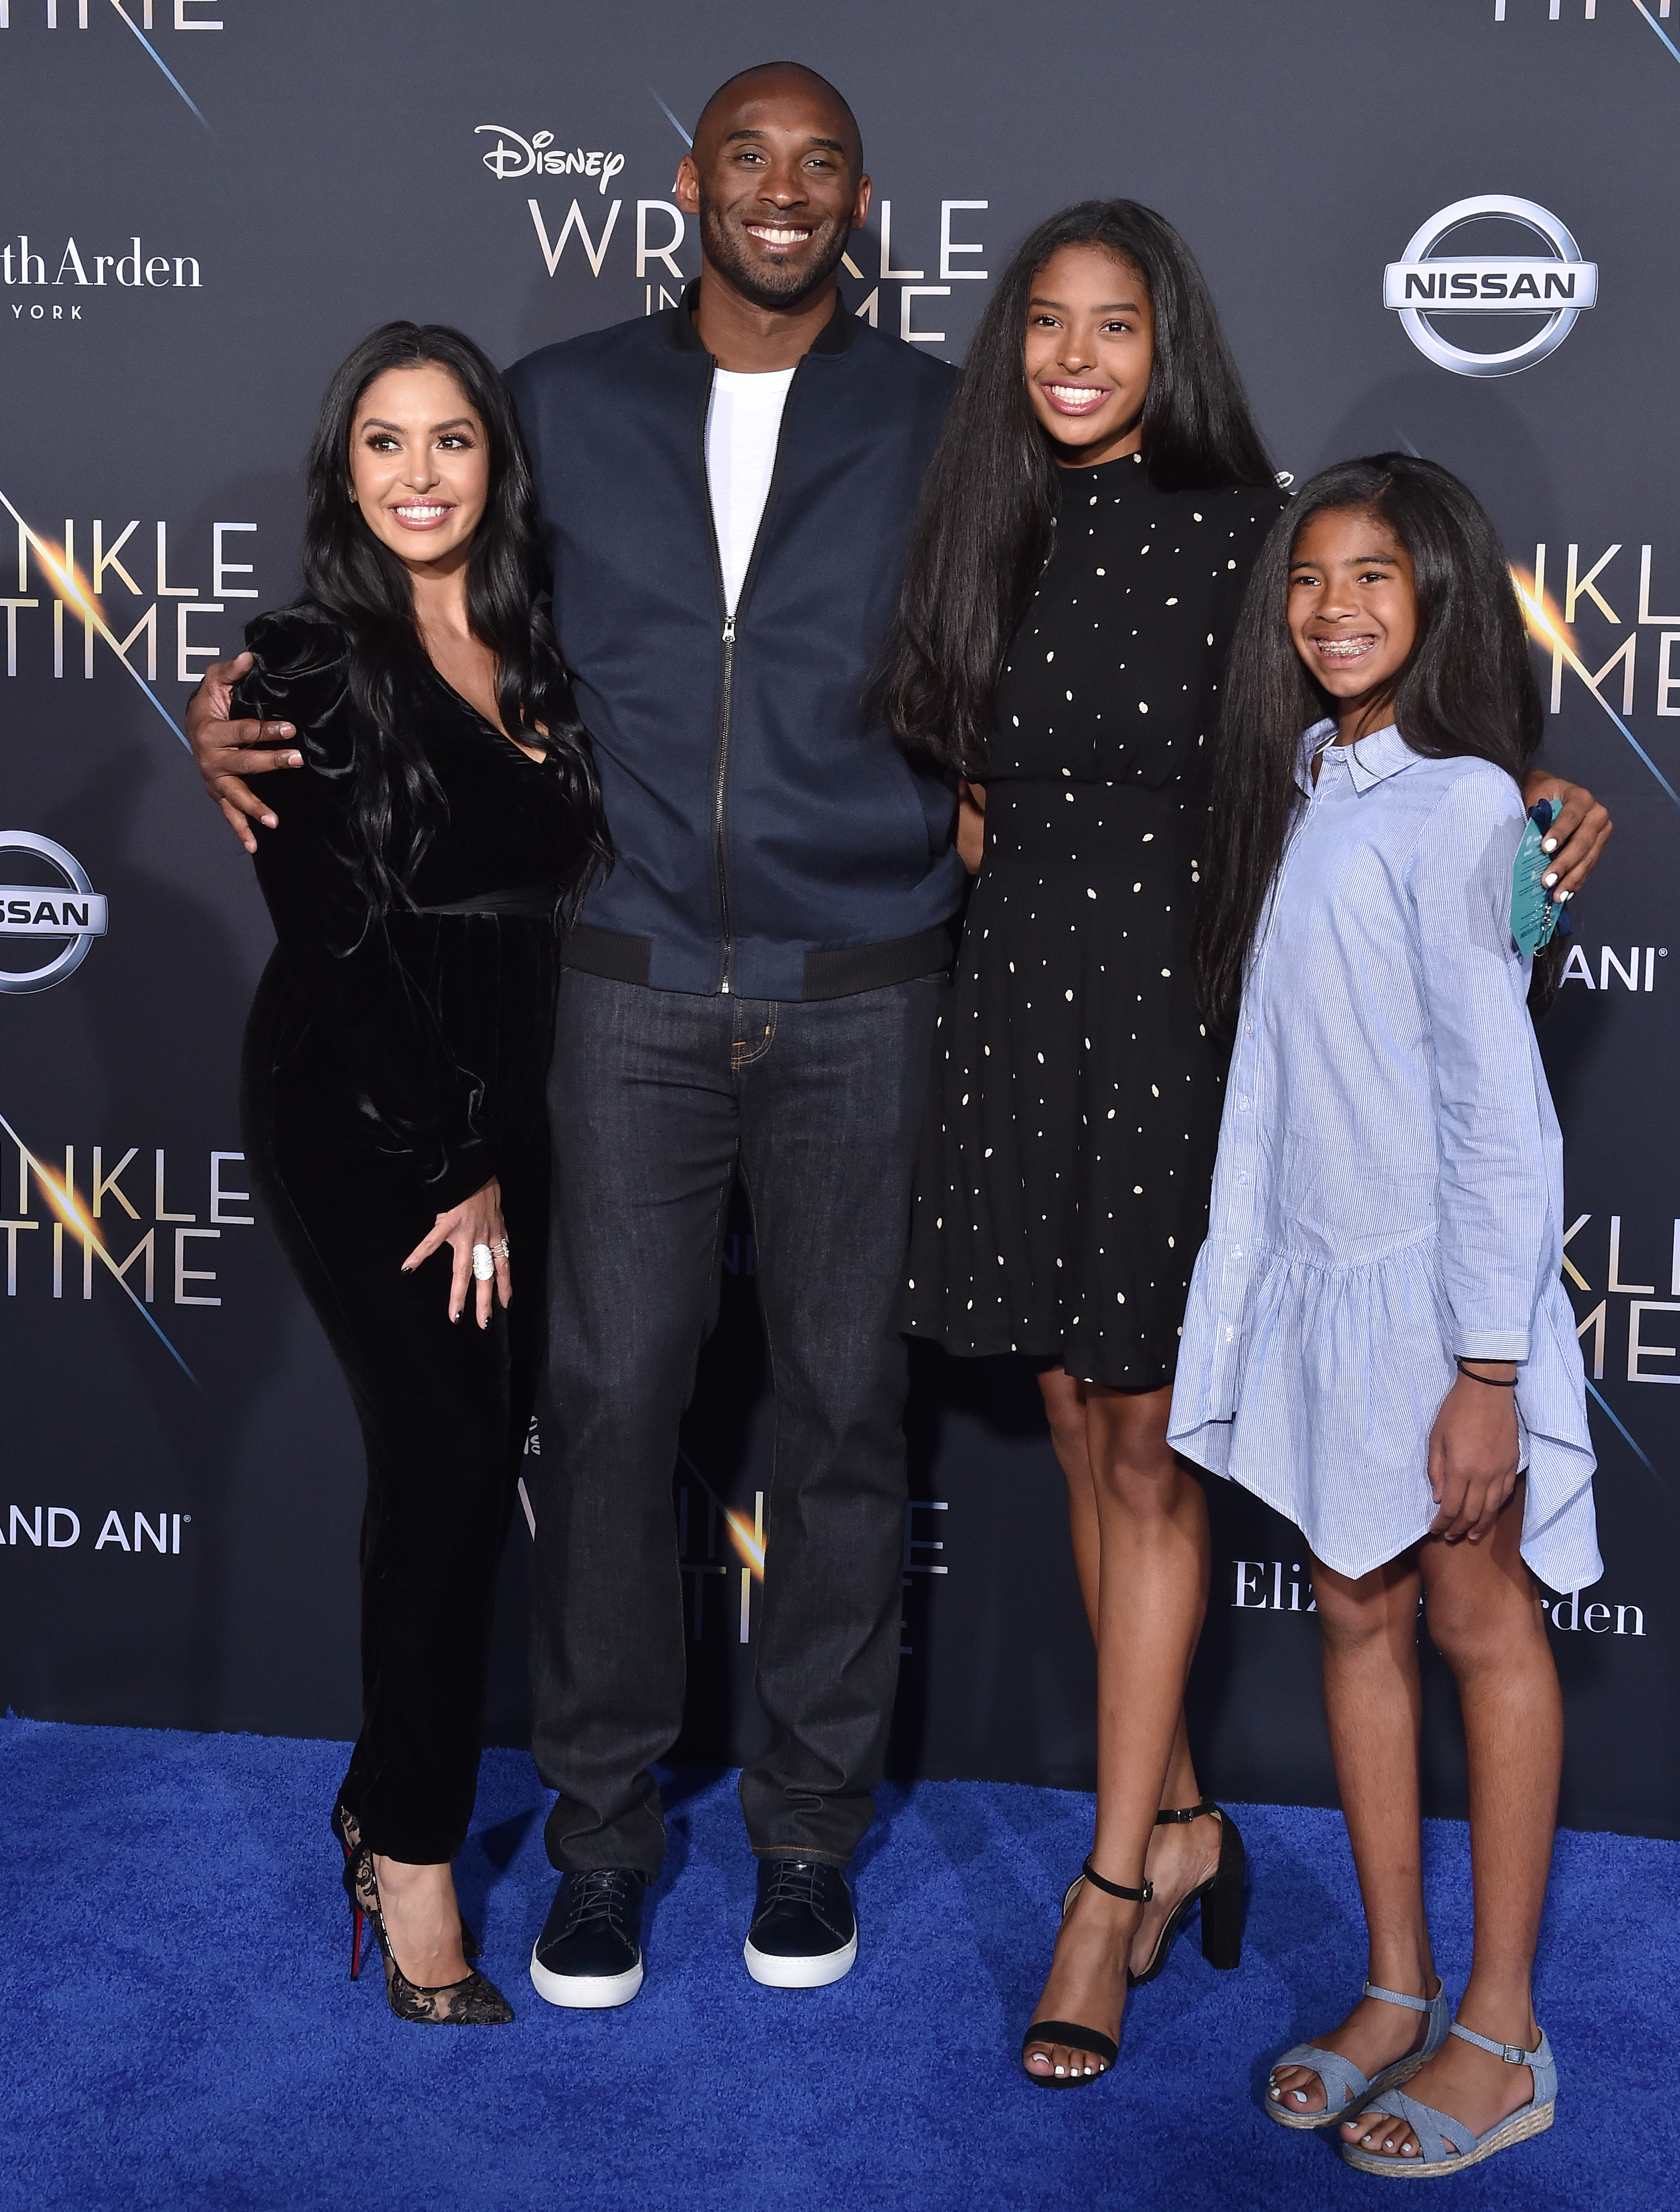 Vanessa Bryant, Kobe Bryant, Natalia Bryant et Gianna Bryant à la première de "A Wrinkle In Time", 2018 | Source : Getty Images